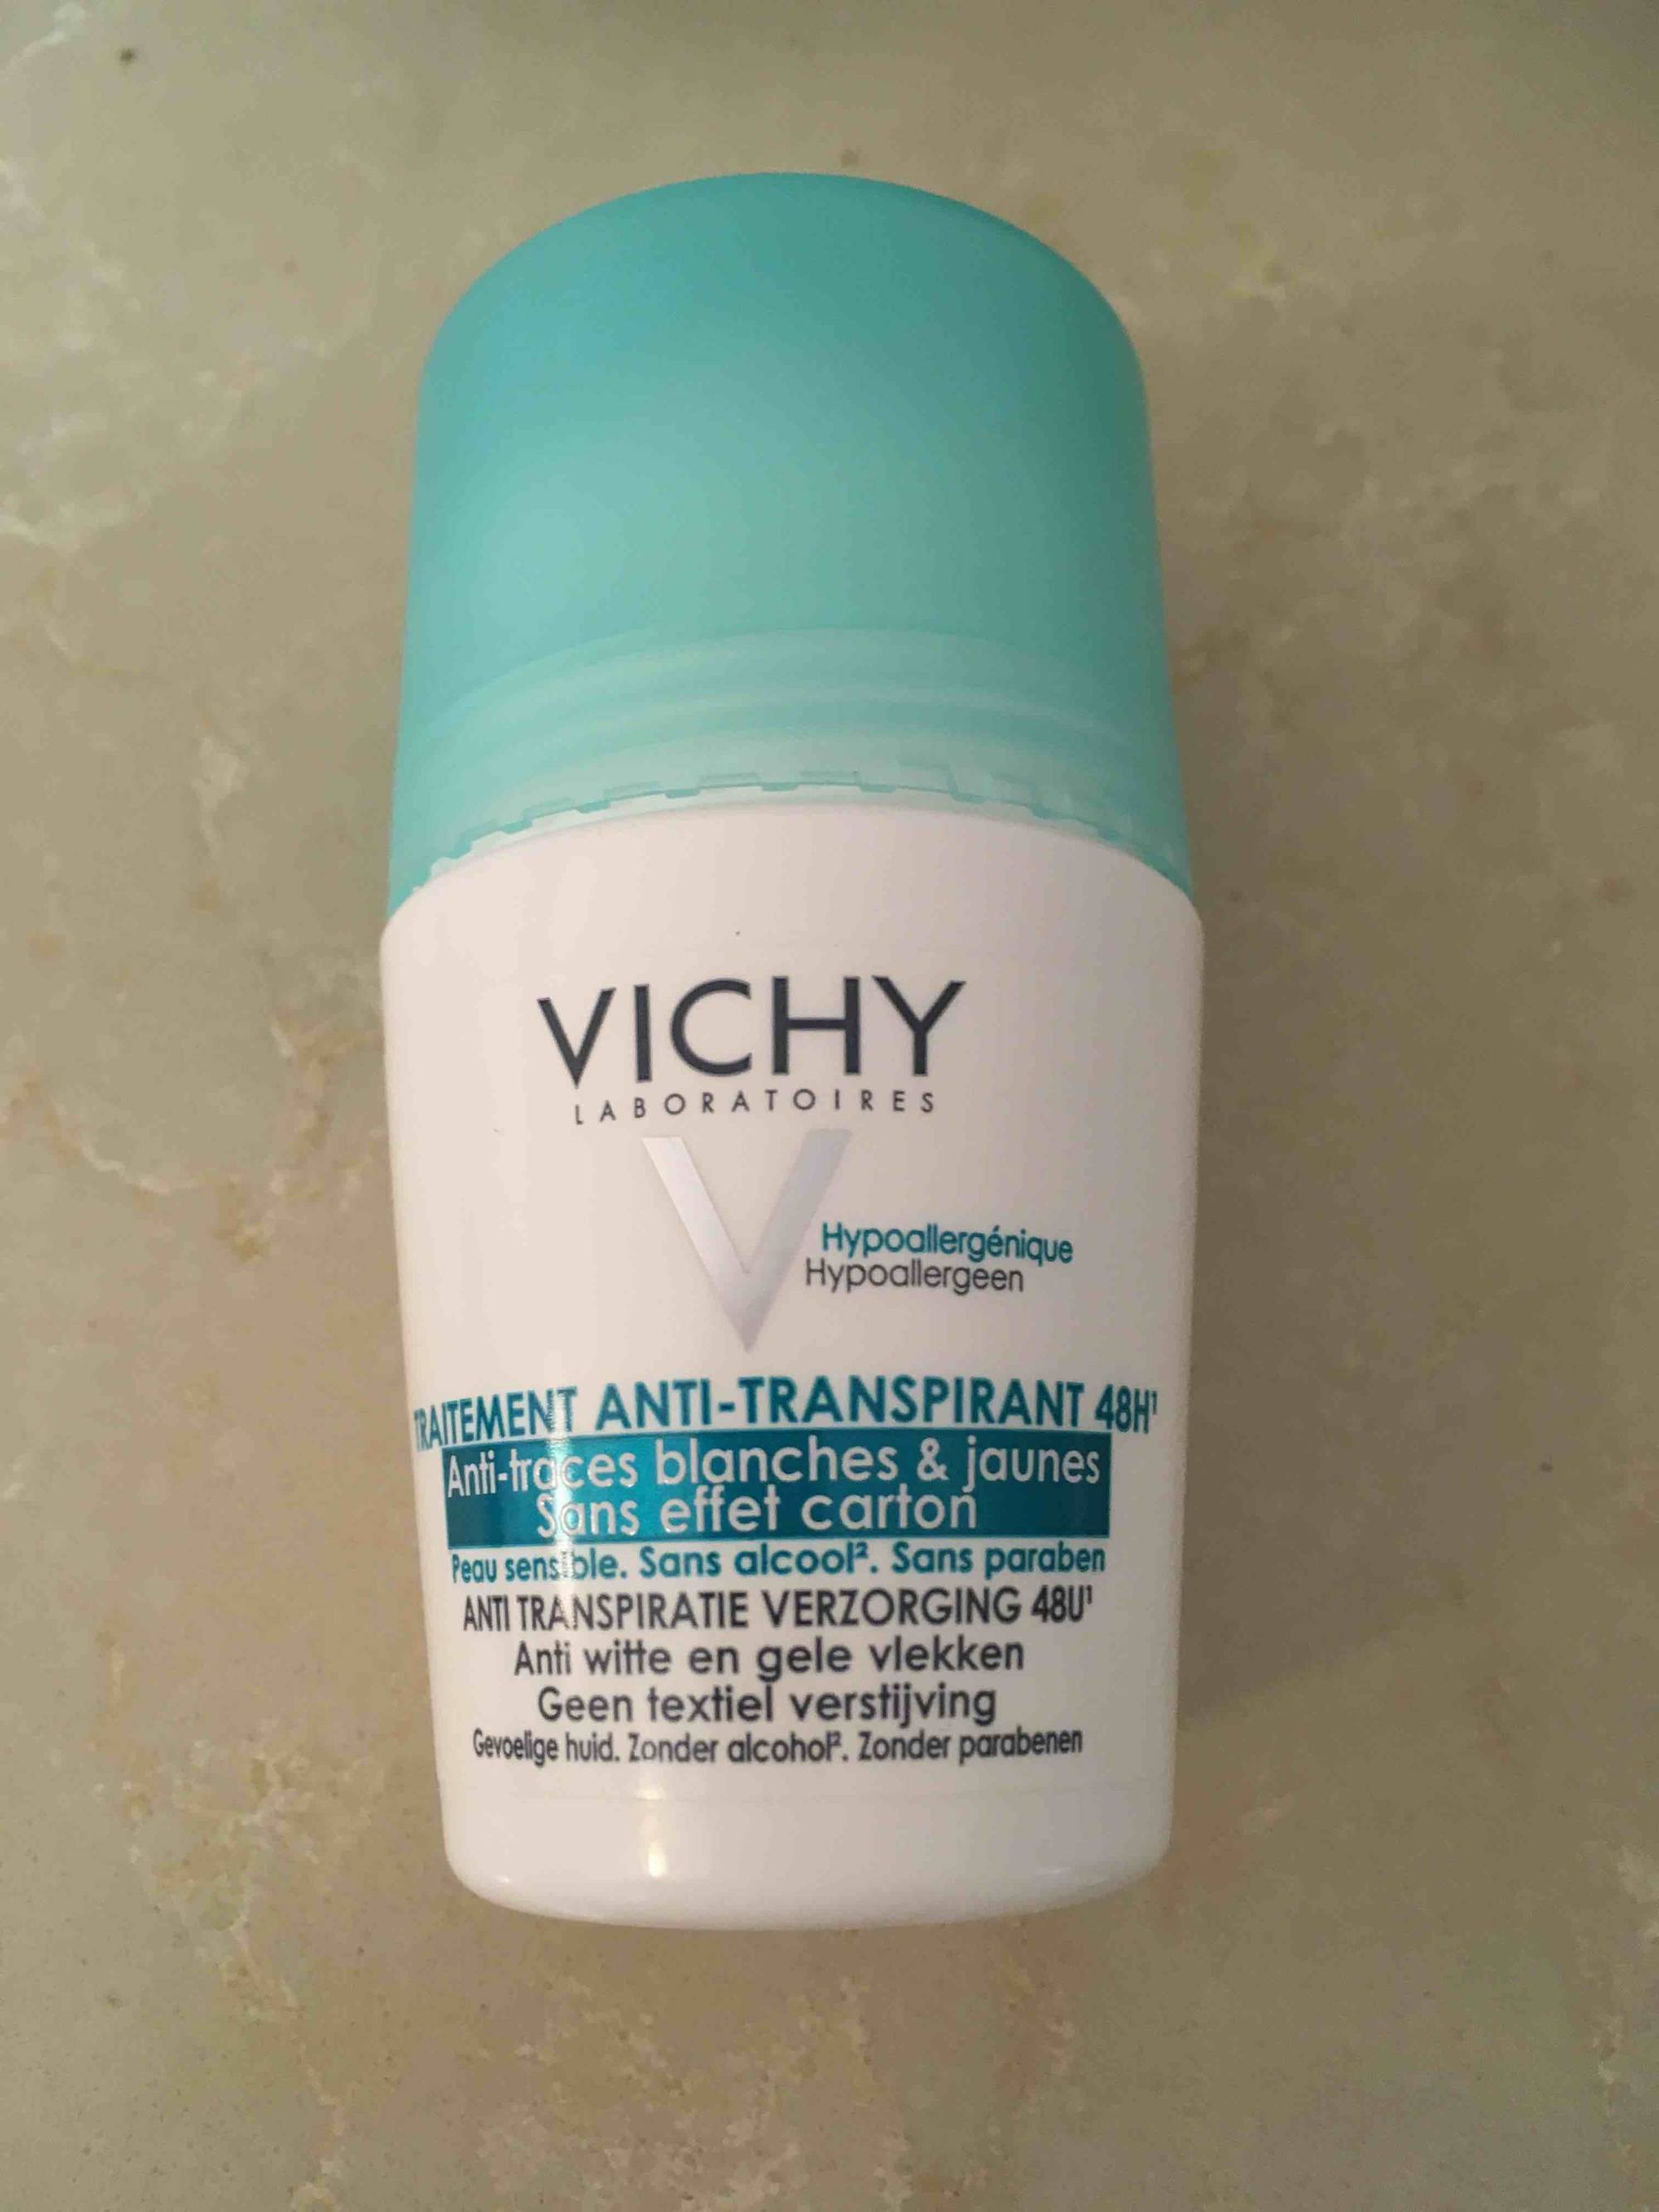 VICHY - Traitement anti-transpirant 48h 